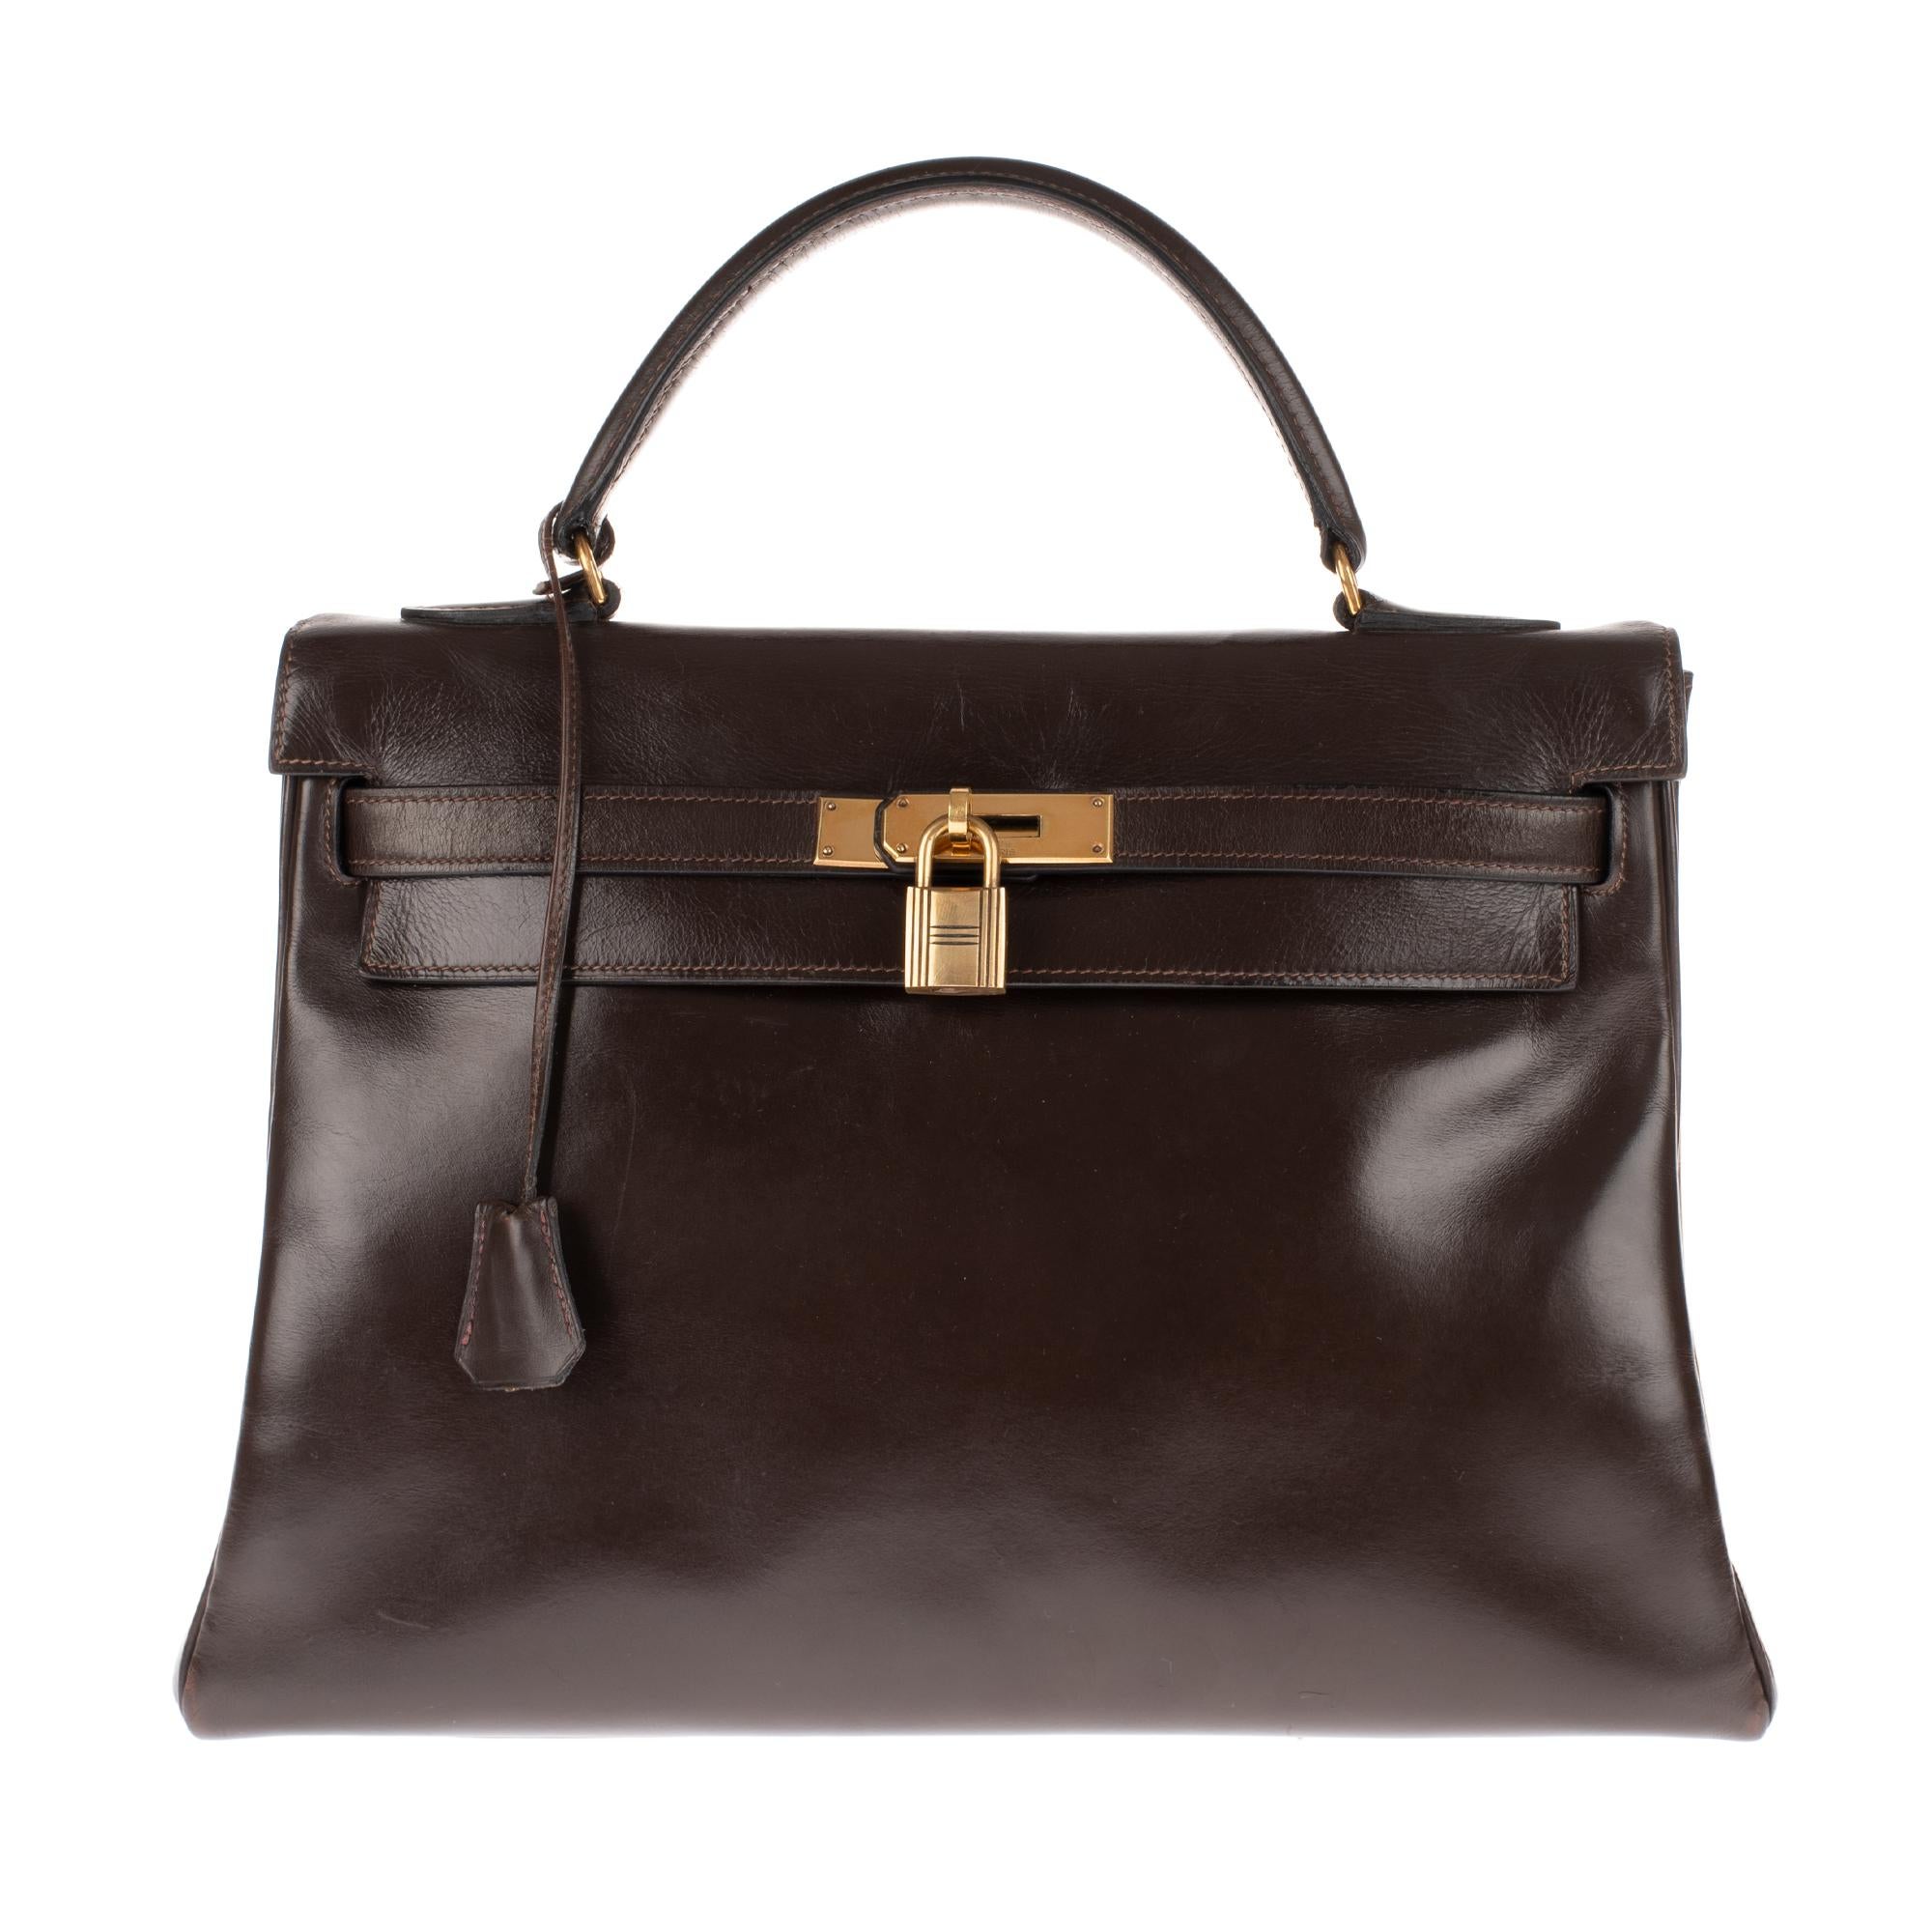 Black Hermès Kelly 32 handbag in brown calfskin leather with strap and golden hardware